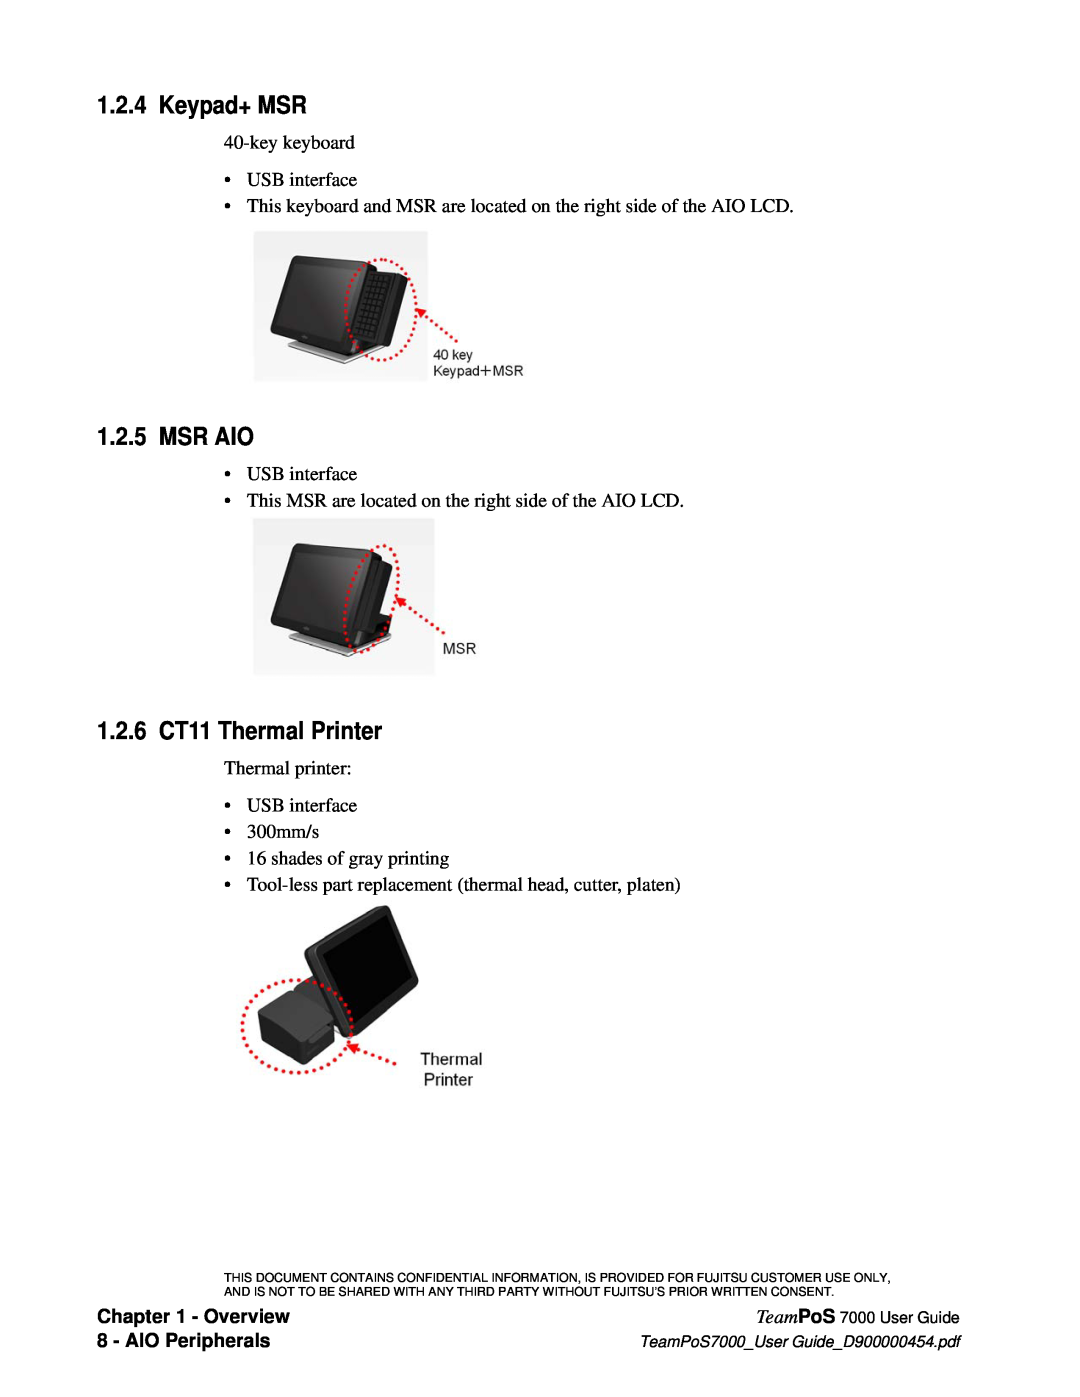 Fujitsu 7000 manual Keypad+ MSR, Msr Aio, 1.2.6 CT11 Thermal Printer, Overview, AIO Peripherals 